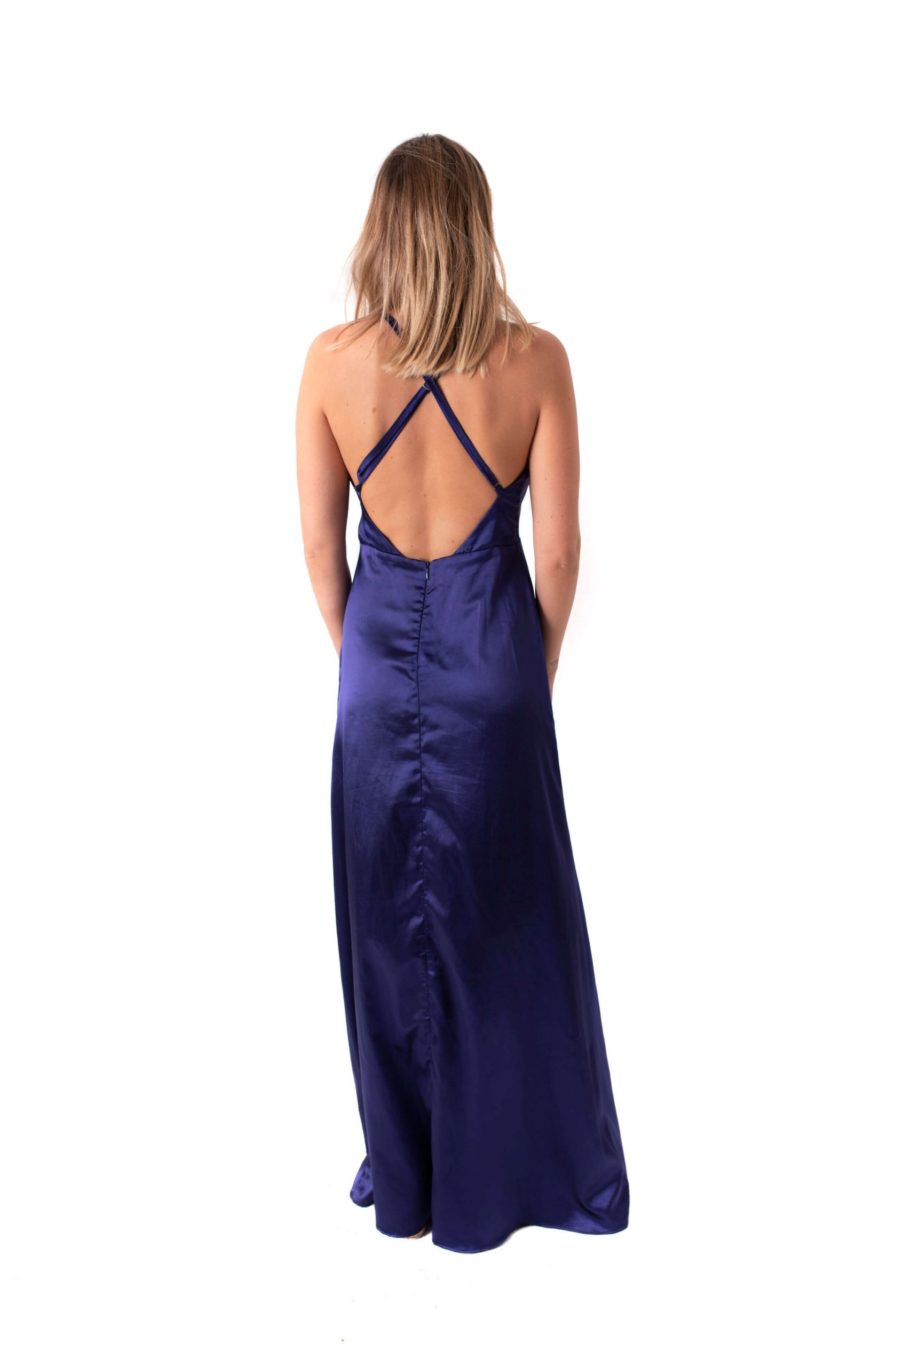 Vestido azul rey marca DEBUT - Chic Dress Project